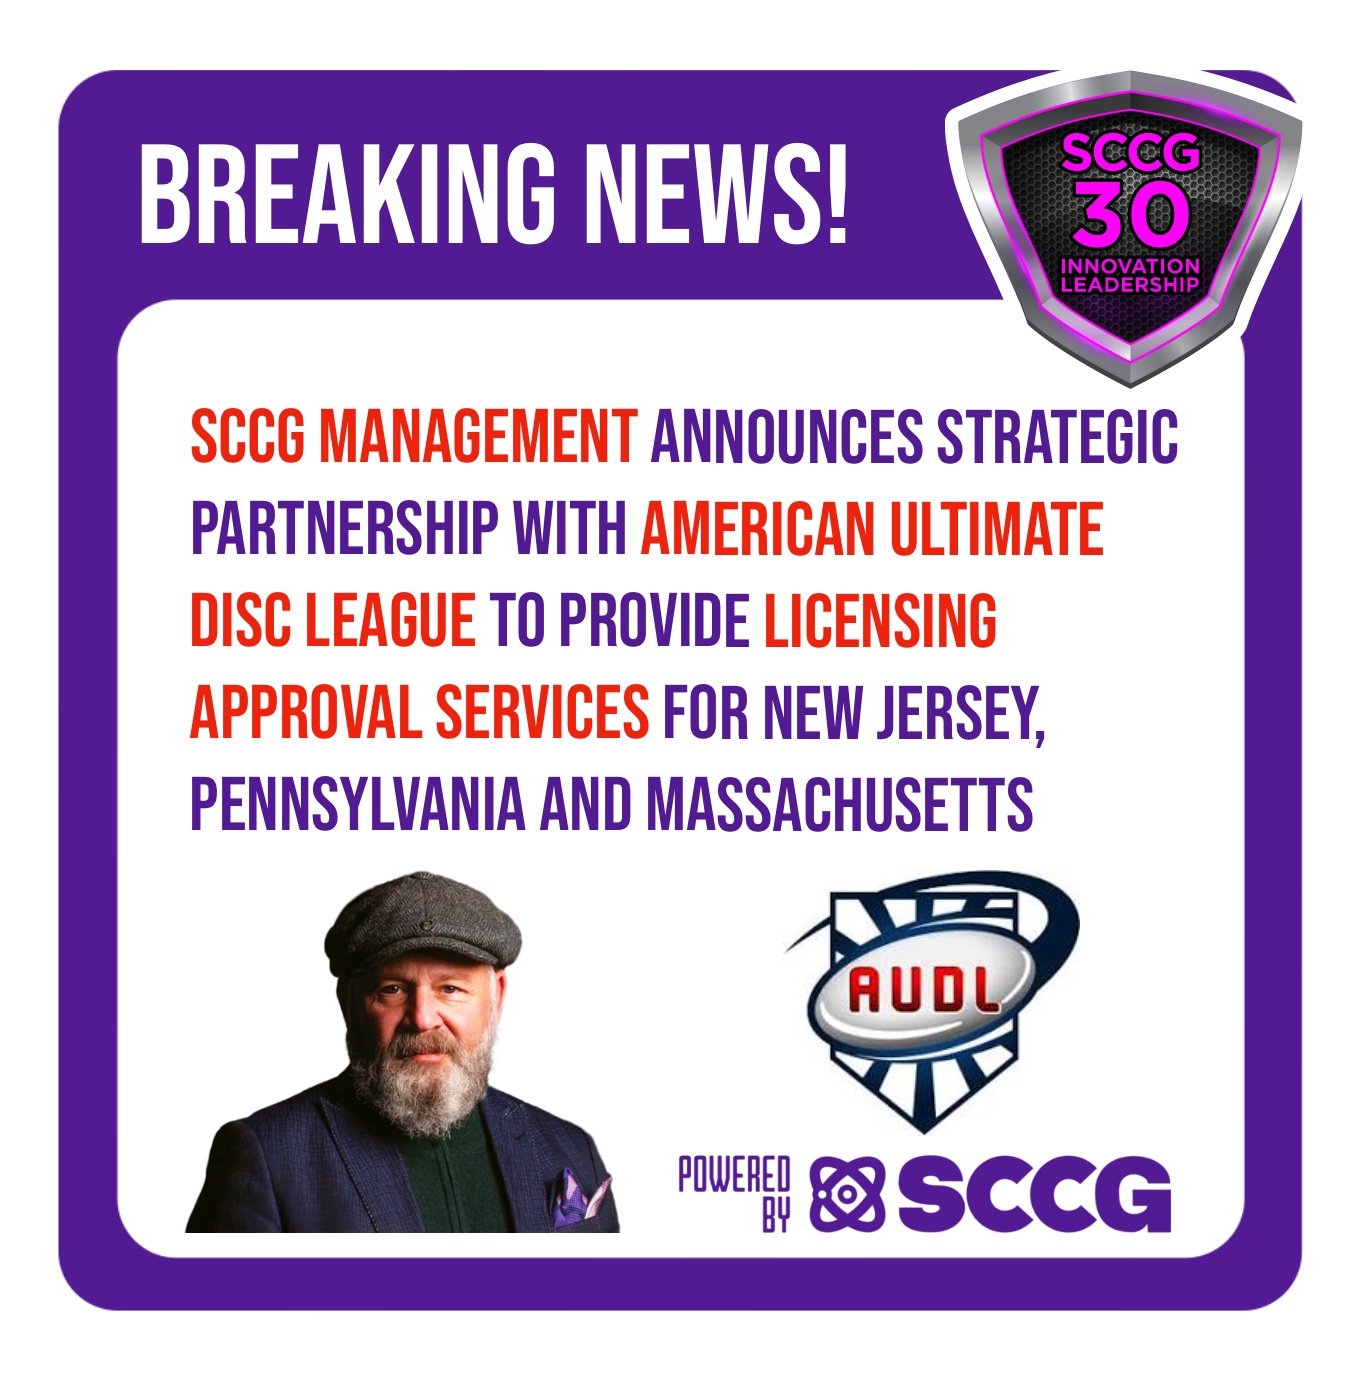 SCCG Management Announces Strategic Partnership with American Ultimate Disc League